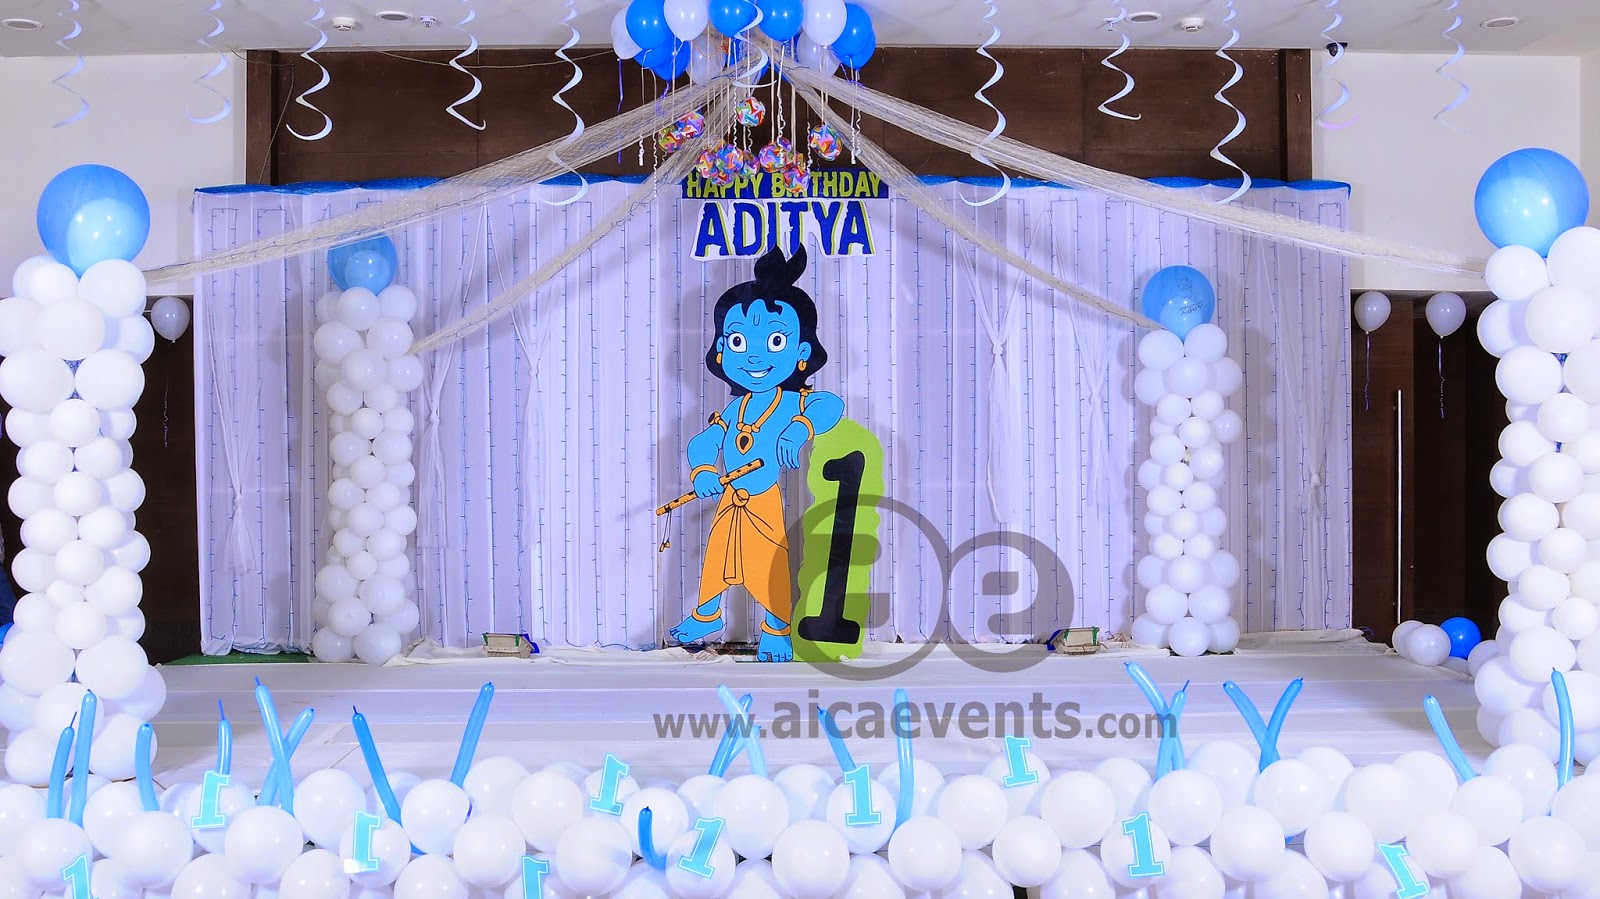 Aicaevents India Krishna Theme Birthday Party Decorations